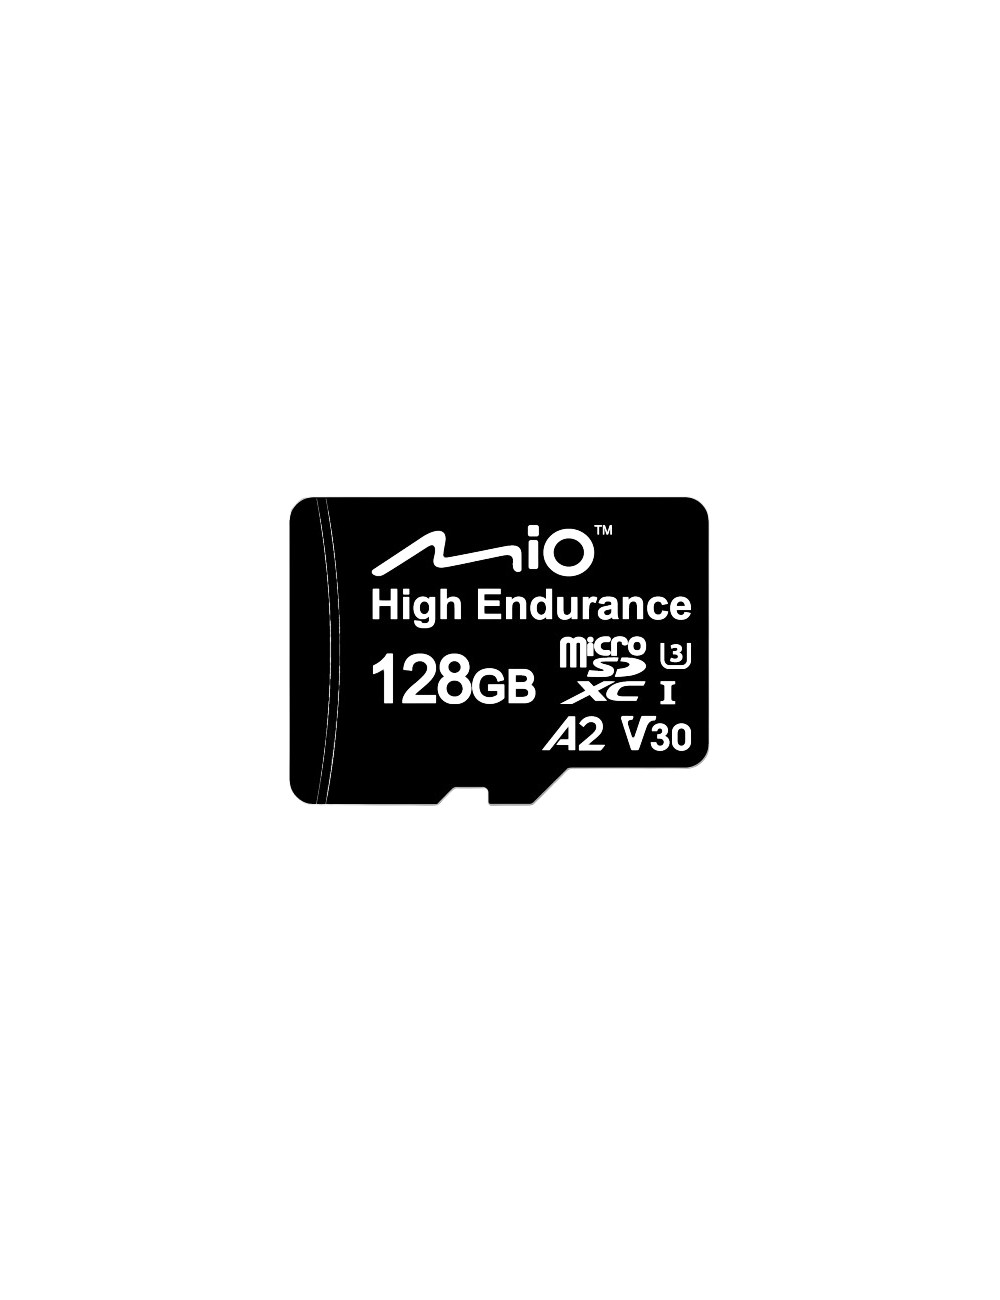 High-Endurance | 128 GB | MicroSD | Flash memory class UHS-I